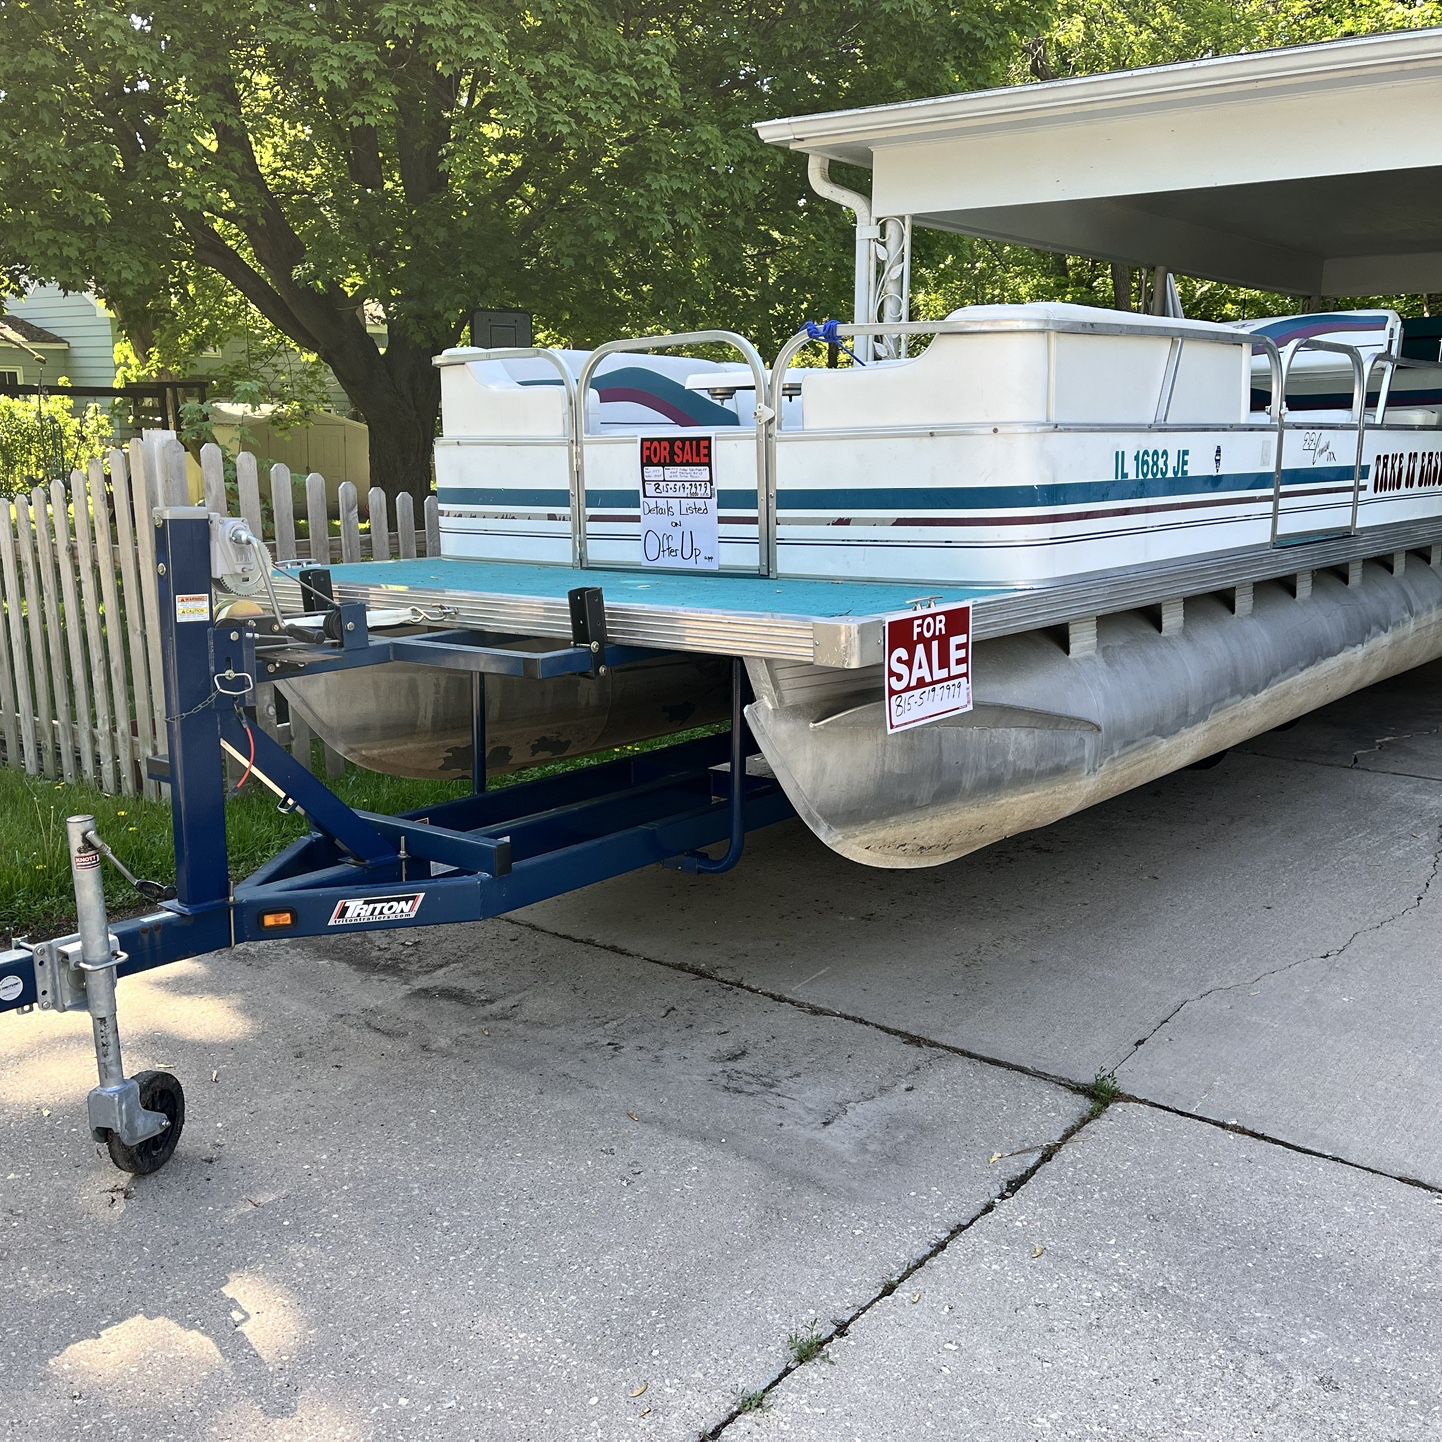 22 ft Fisher Pontoon Boat For Sale